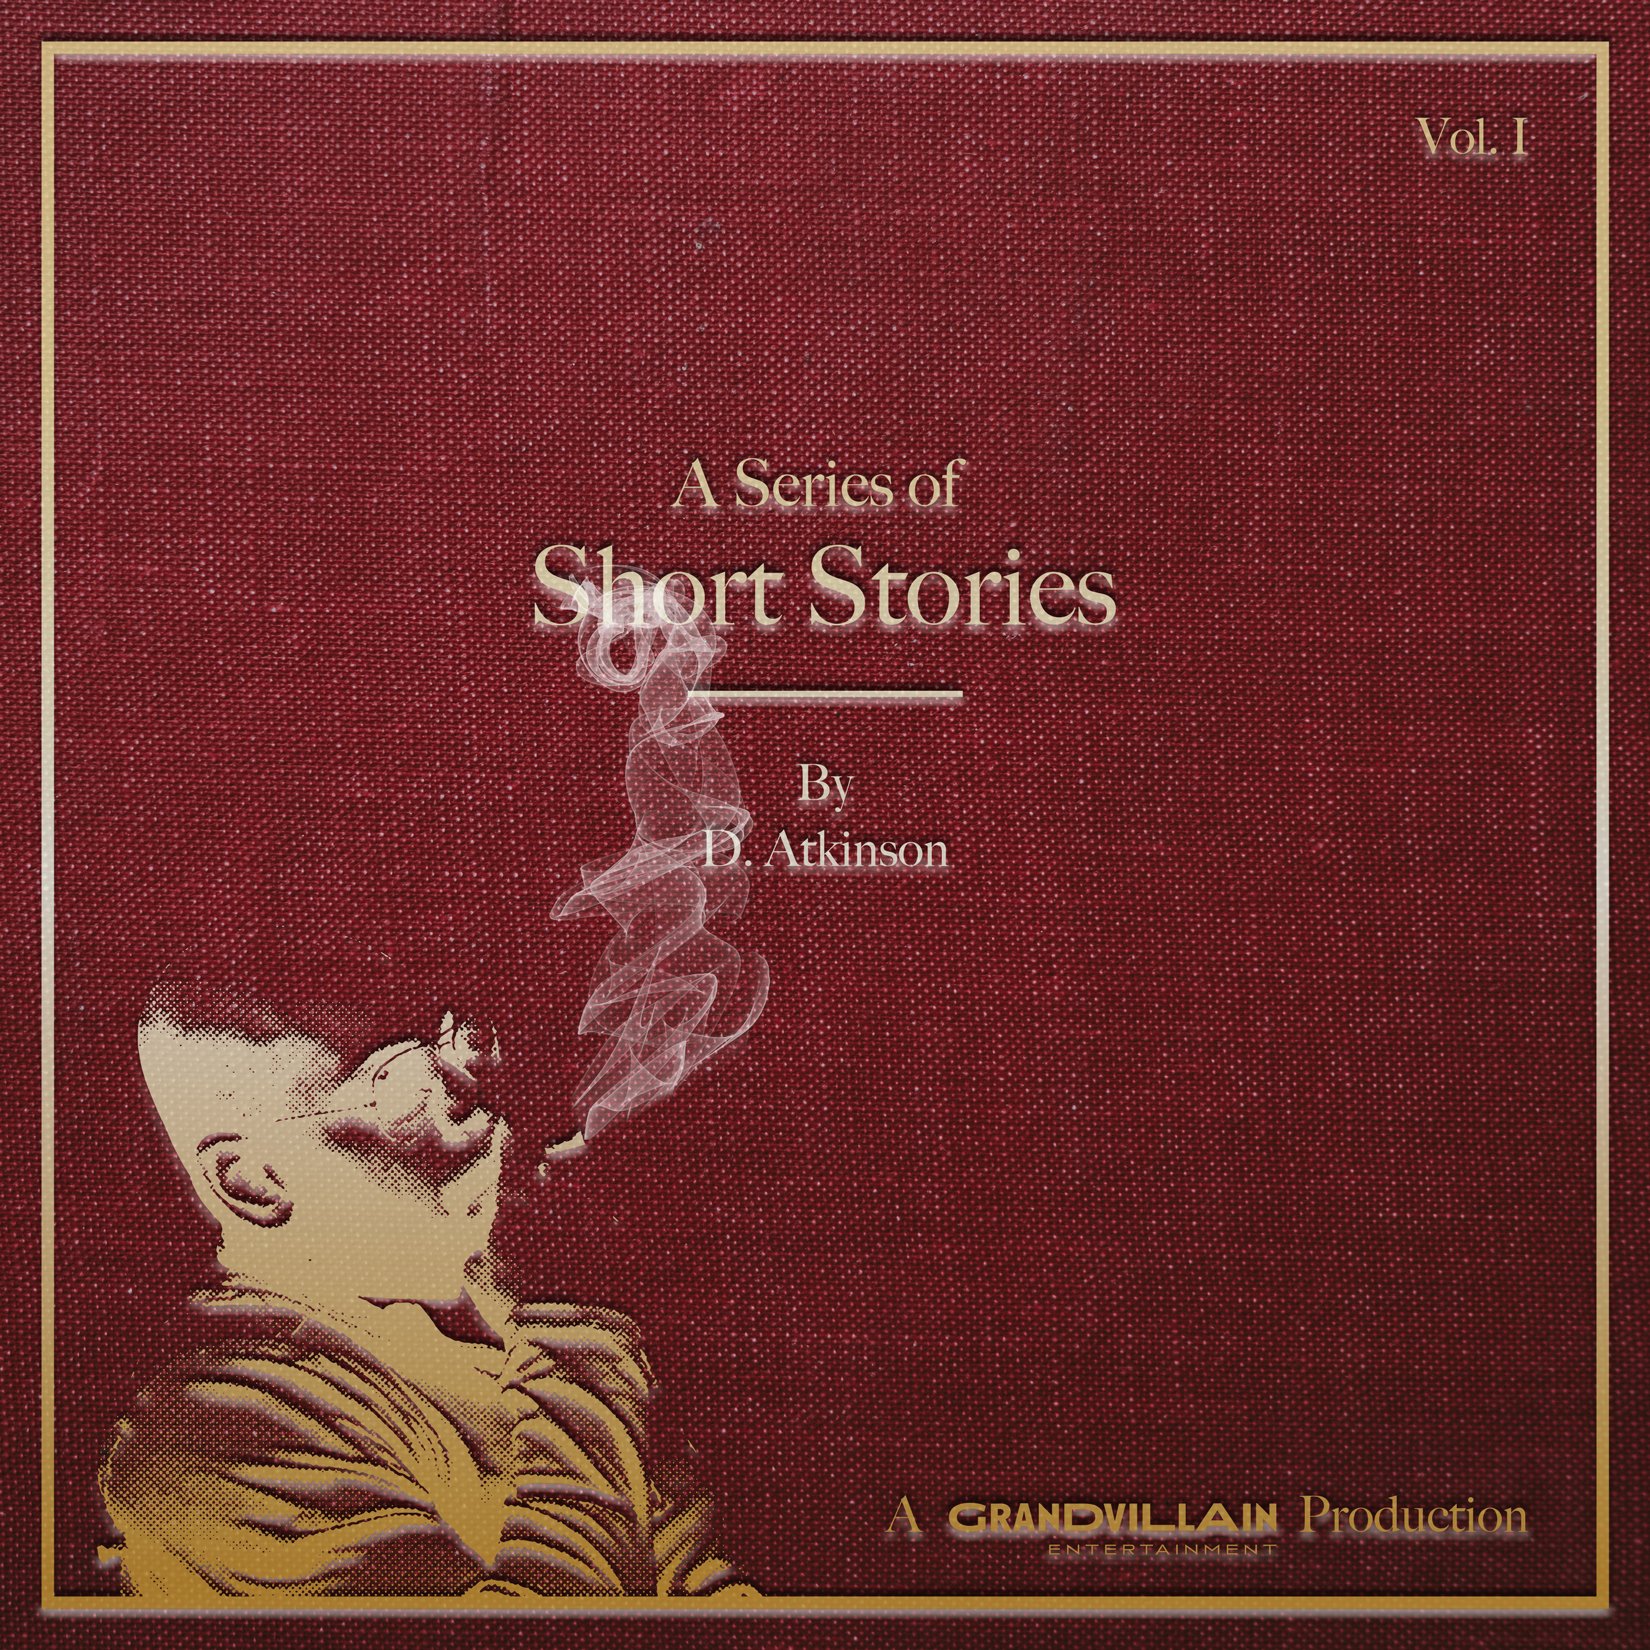 A Series of Short Stories By D. Atkinson // Album Cover Art Design